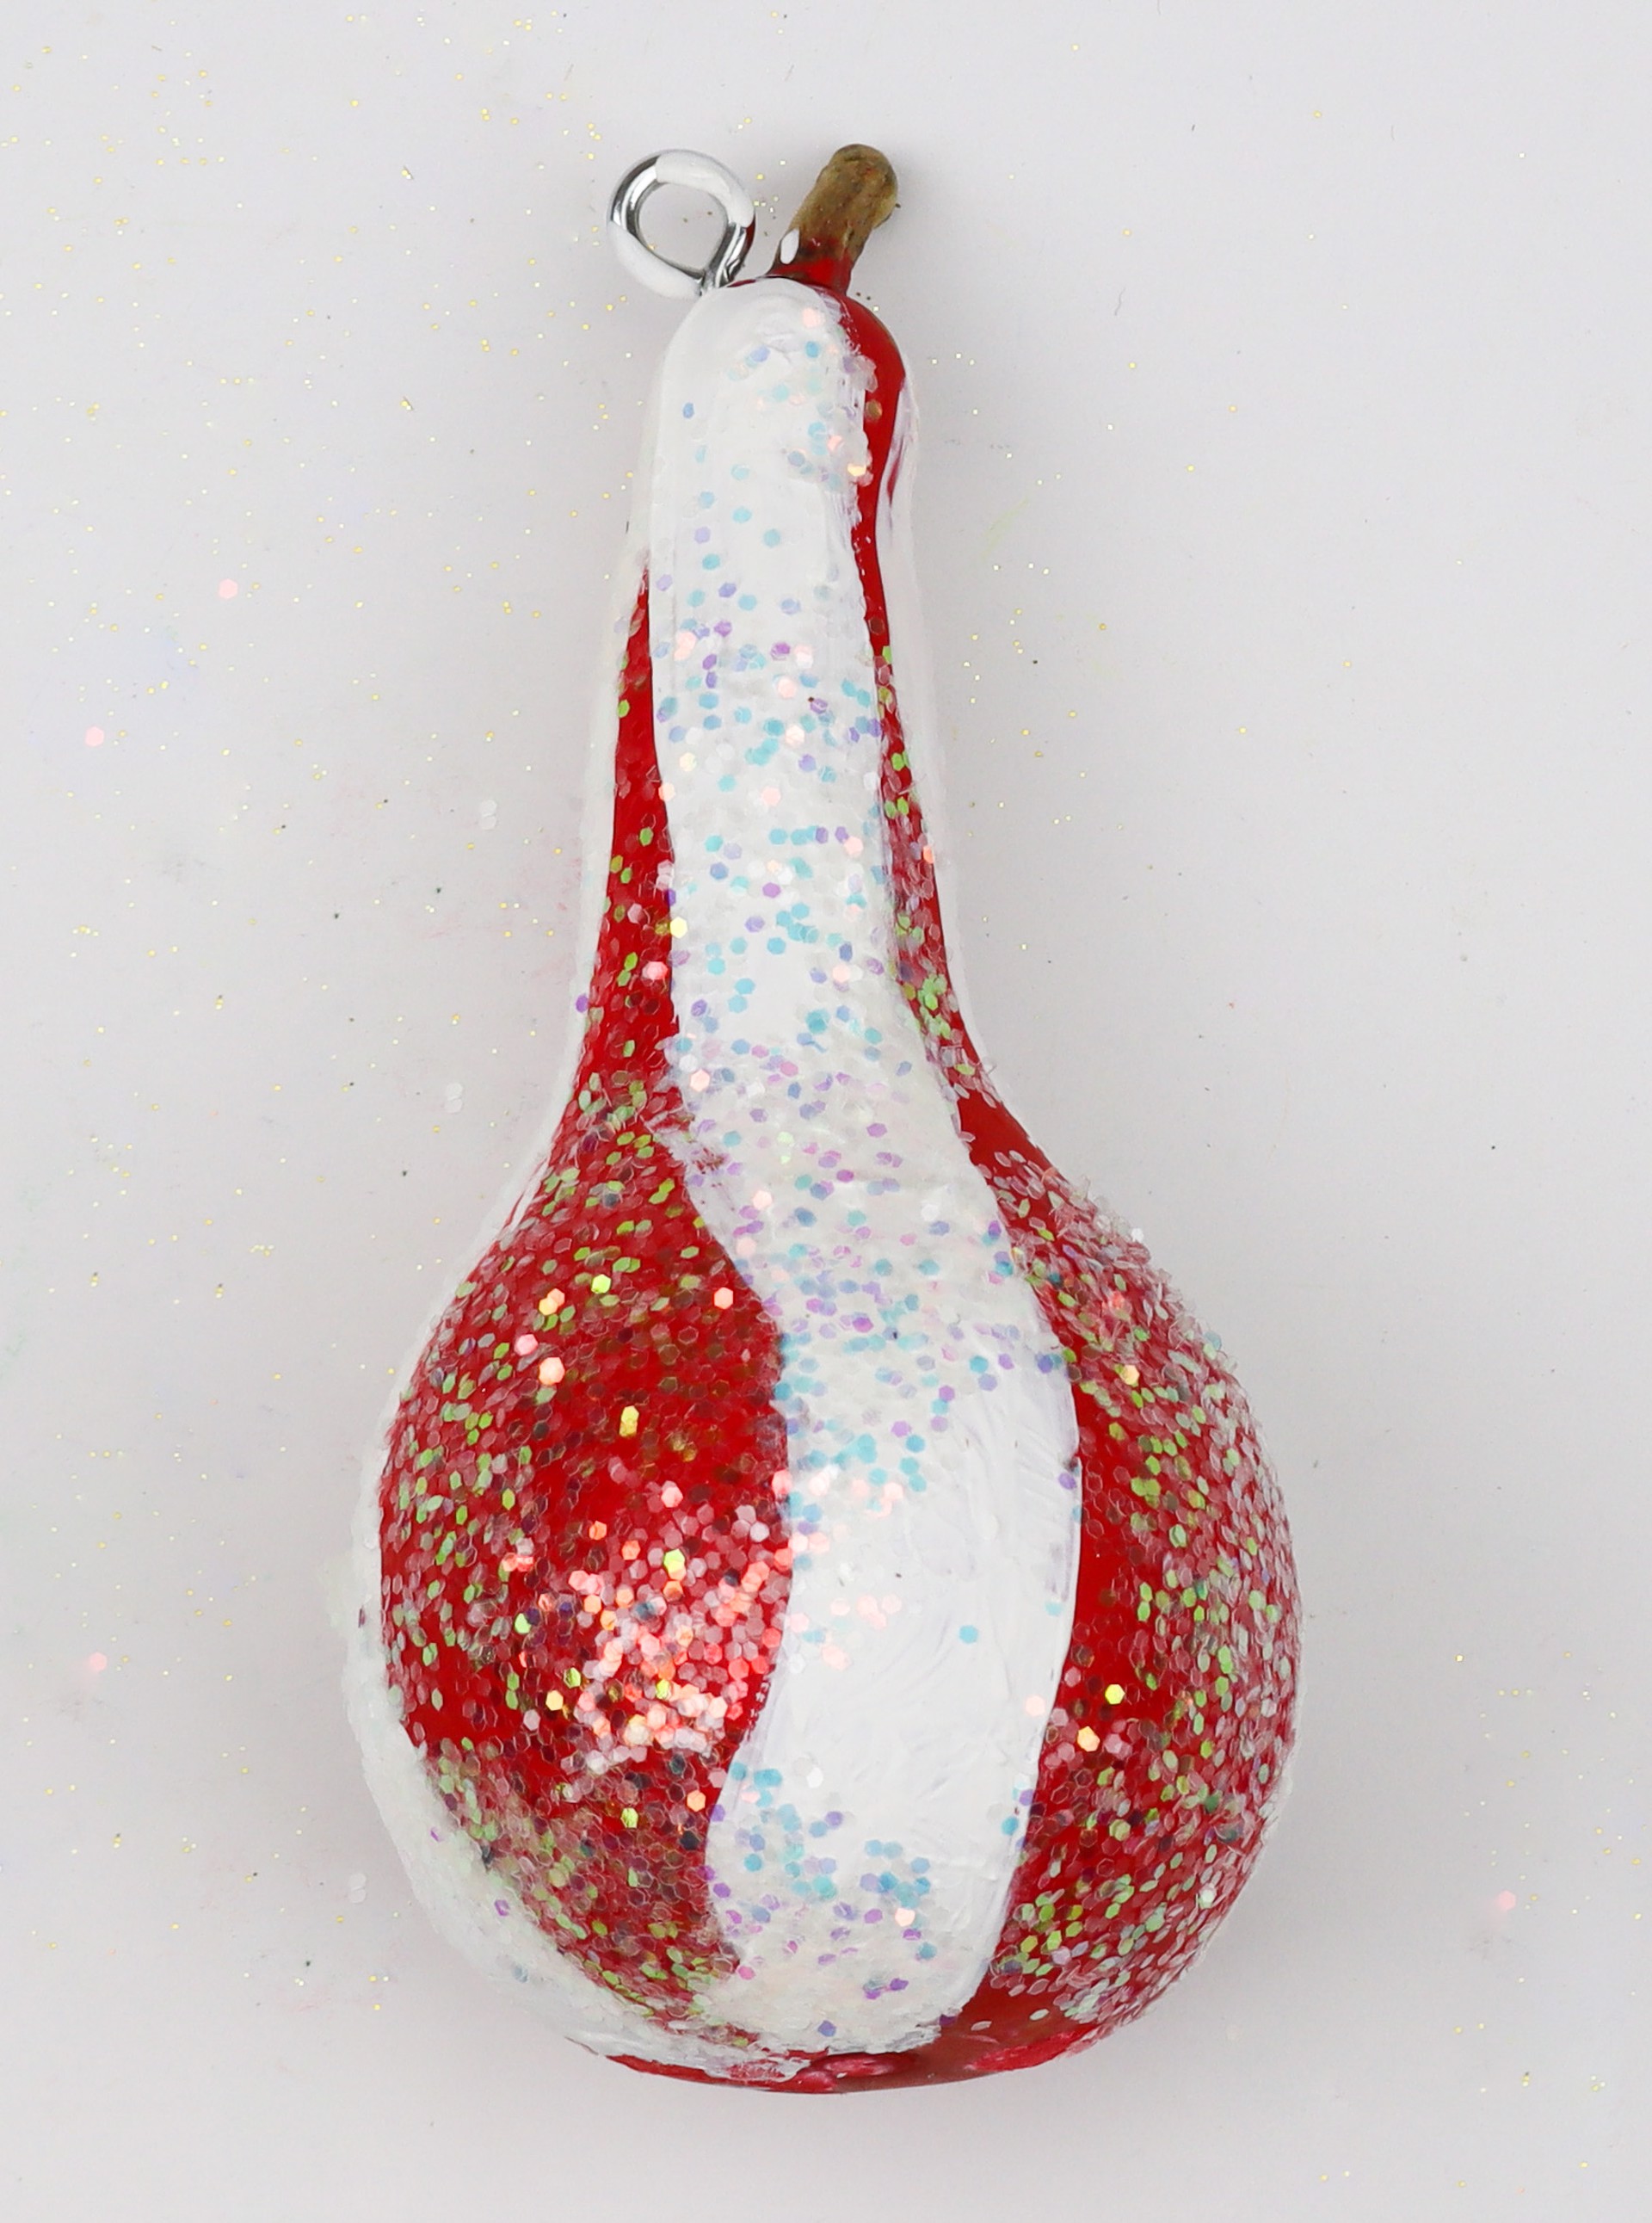 Red and White Glitter Gourd (gourd) by Chris Schallhorn